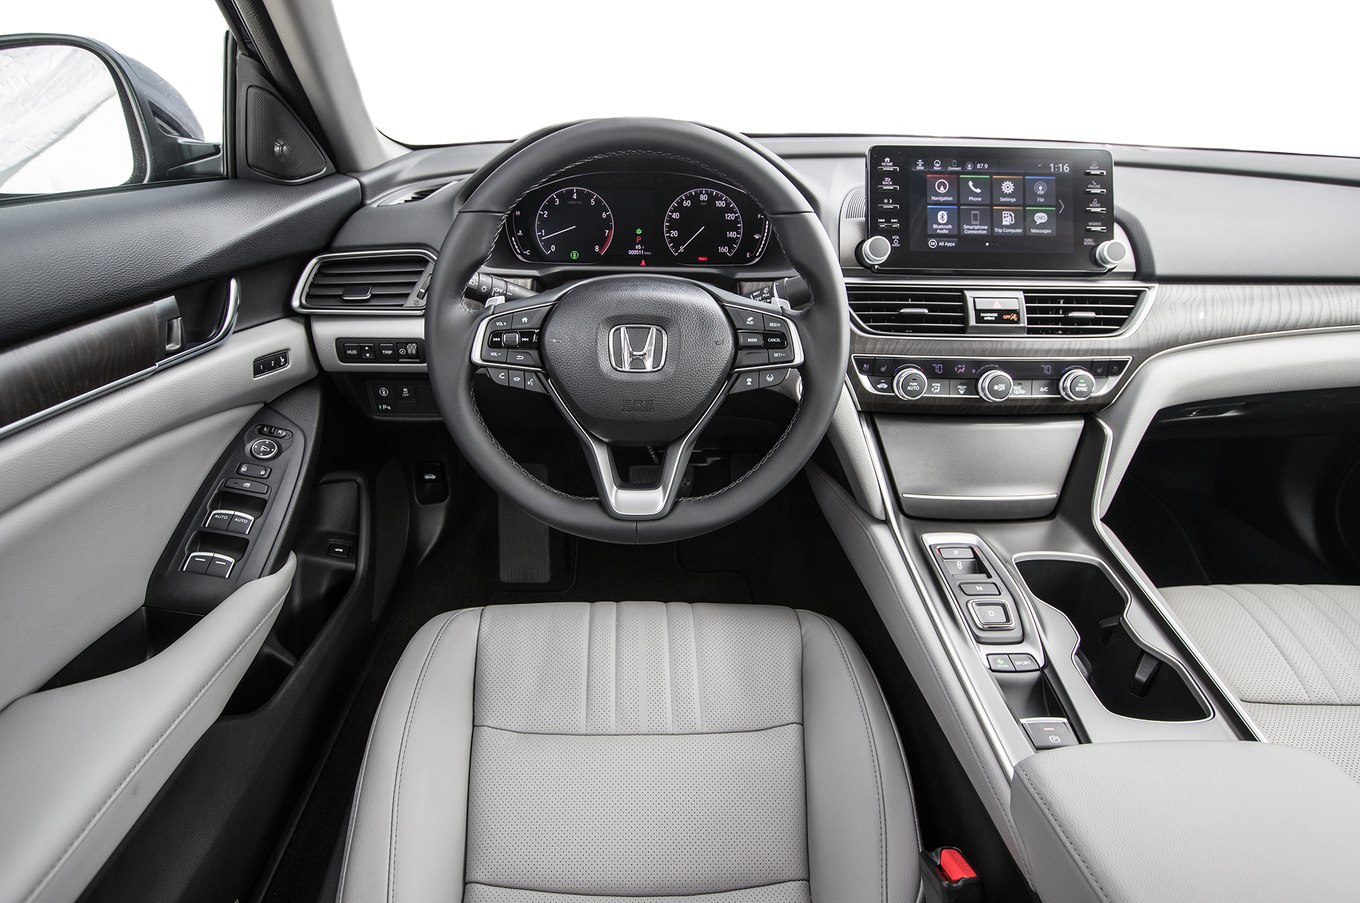 2018 Honda Accord Touring 2 0T front interior drivers side - 2020 Honda Accord نسبت به سال گذشته 150 دلار گرانتر